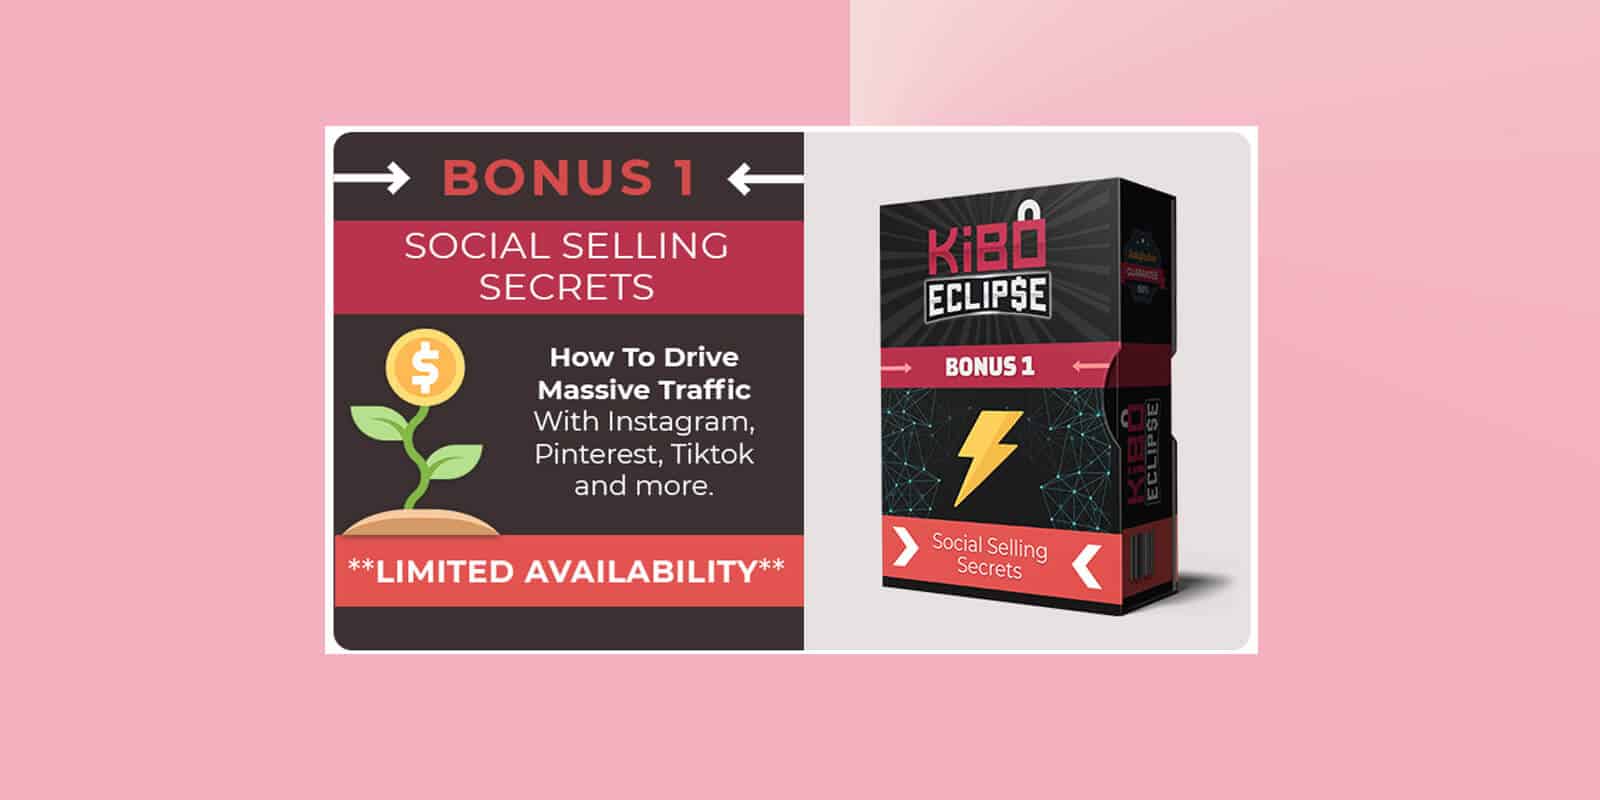 Kibo Eclipse Bonus 1-Social Selling Secrets